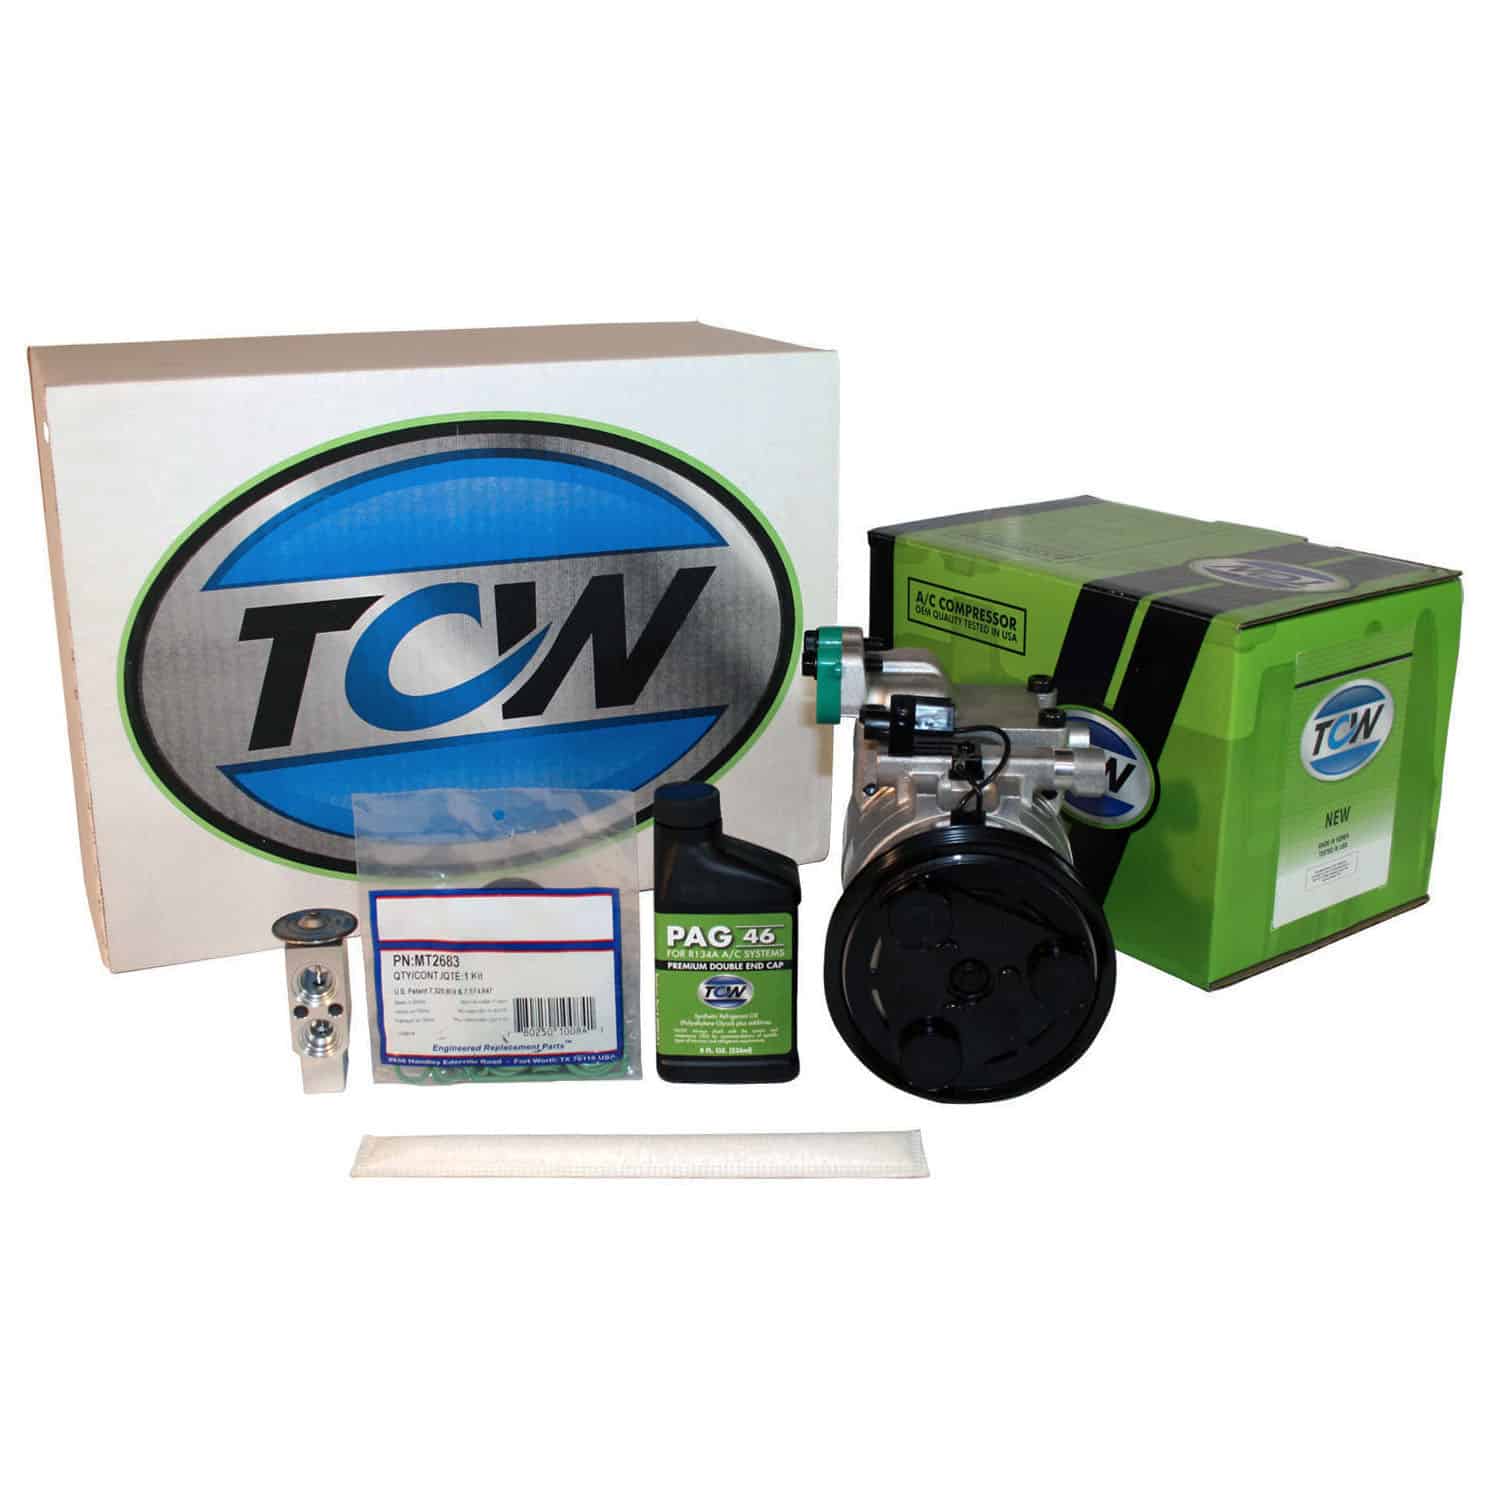 TCW Vehicle A/C Kit K1000456N New Product Image field_60b6a13a6e67c